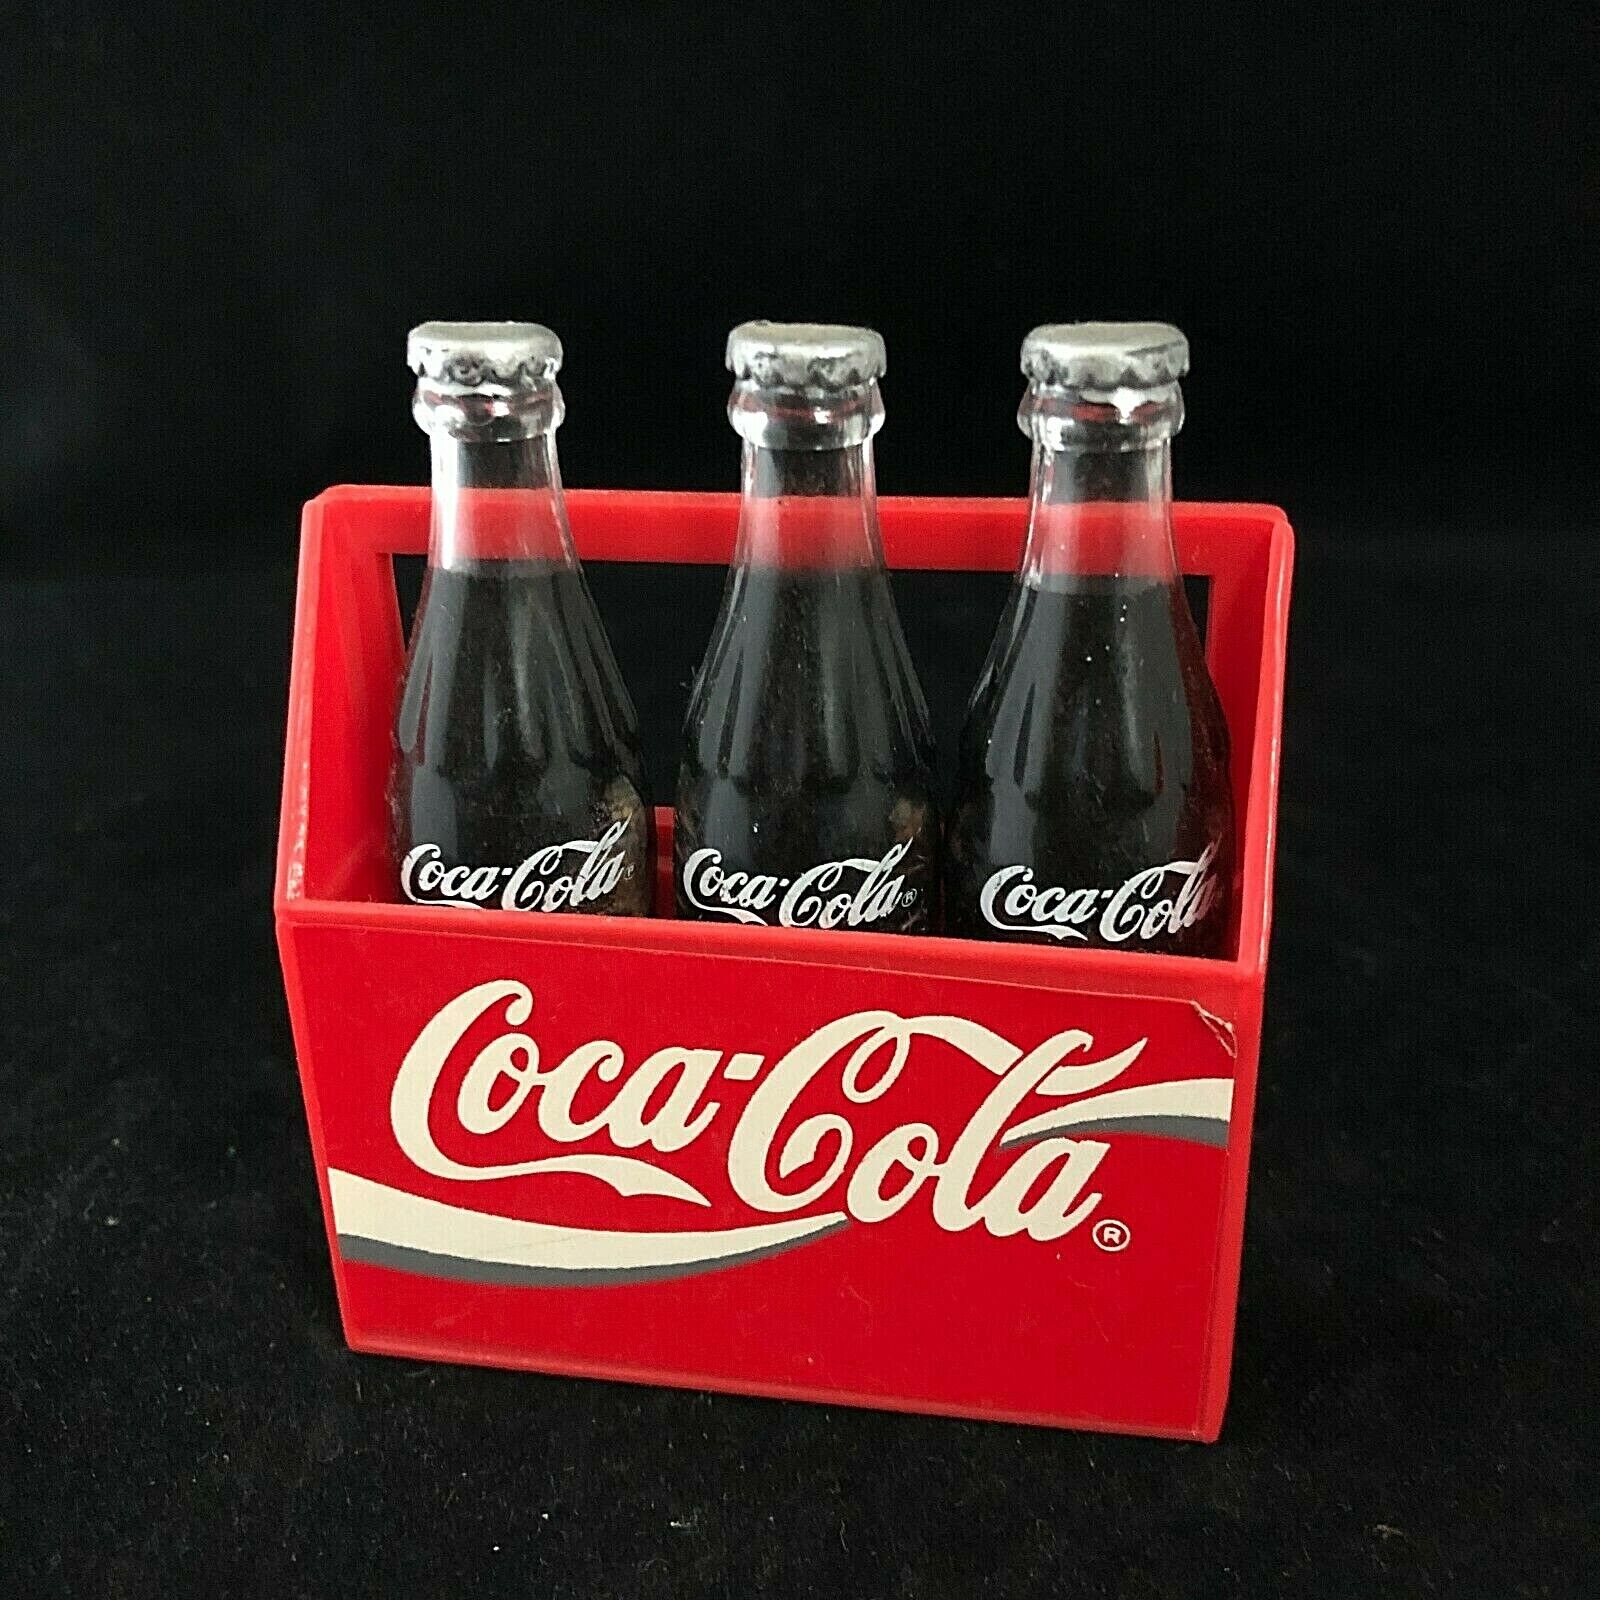 Coca-Cola Three Bottles Magnets and Bottle Holder - 1993